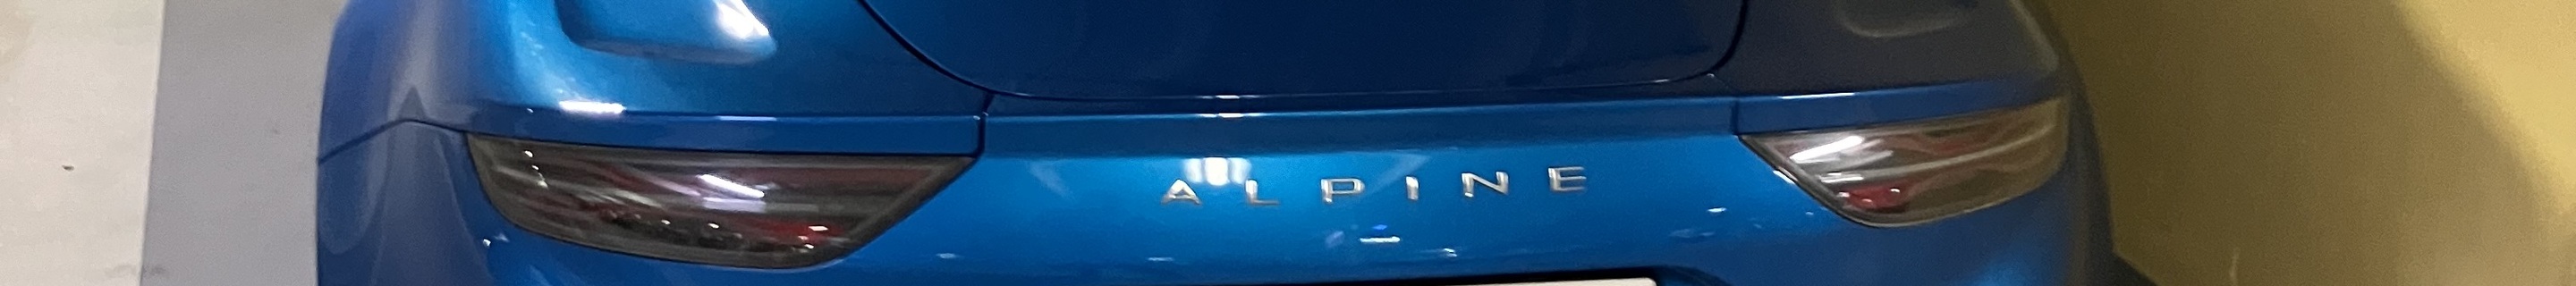 Alpine A110 2022